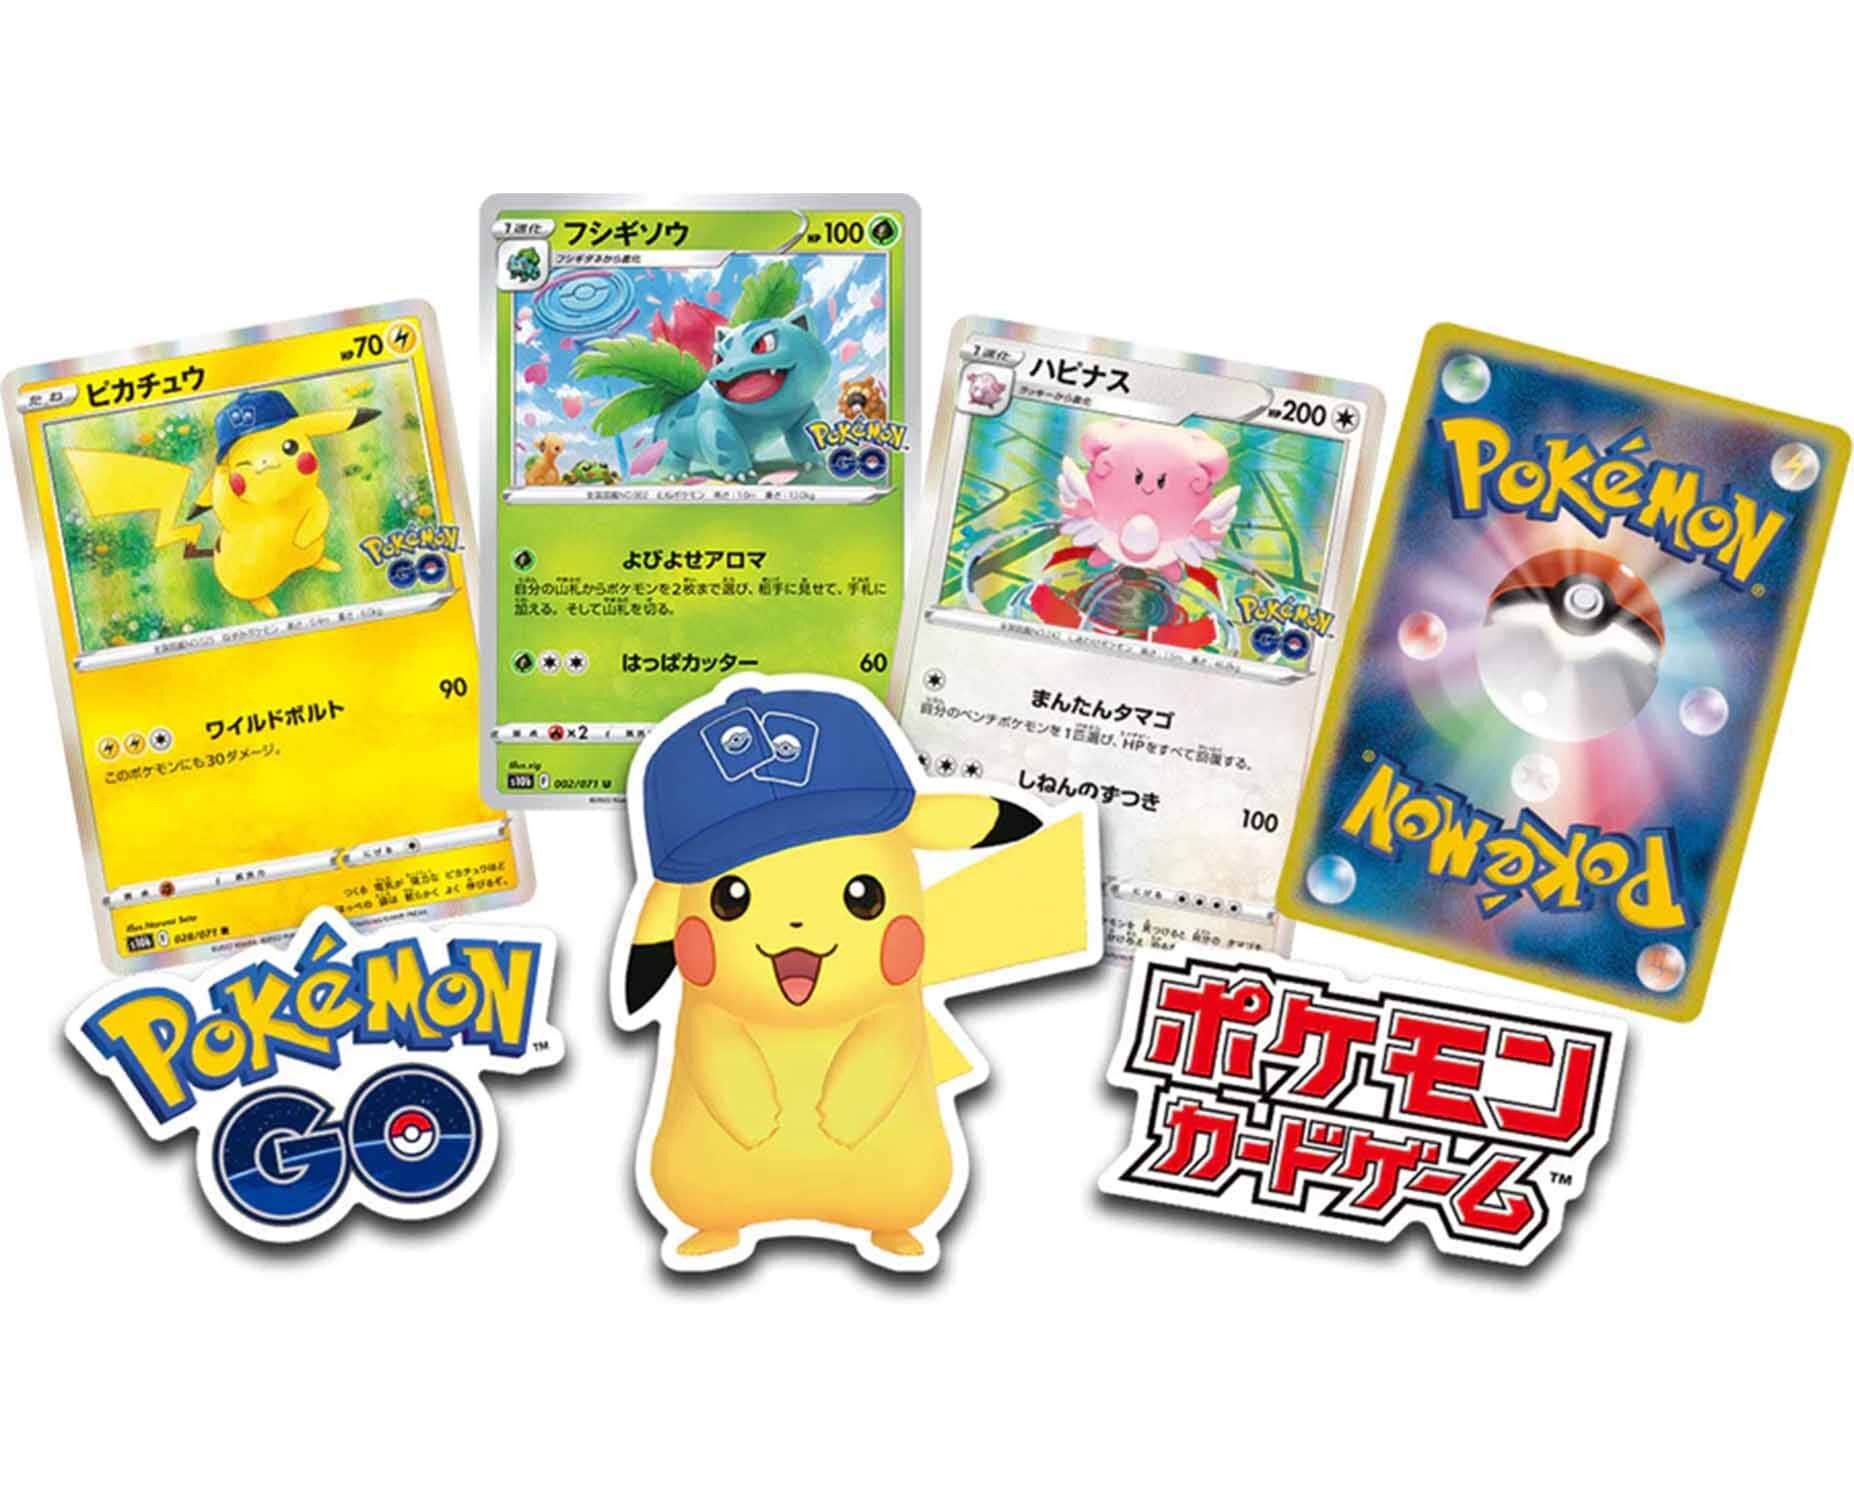 Pokémon GO Mewtwo (s10b) Special Set Collection Box